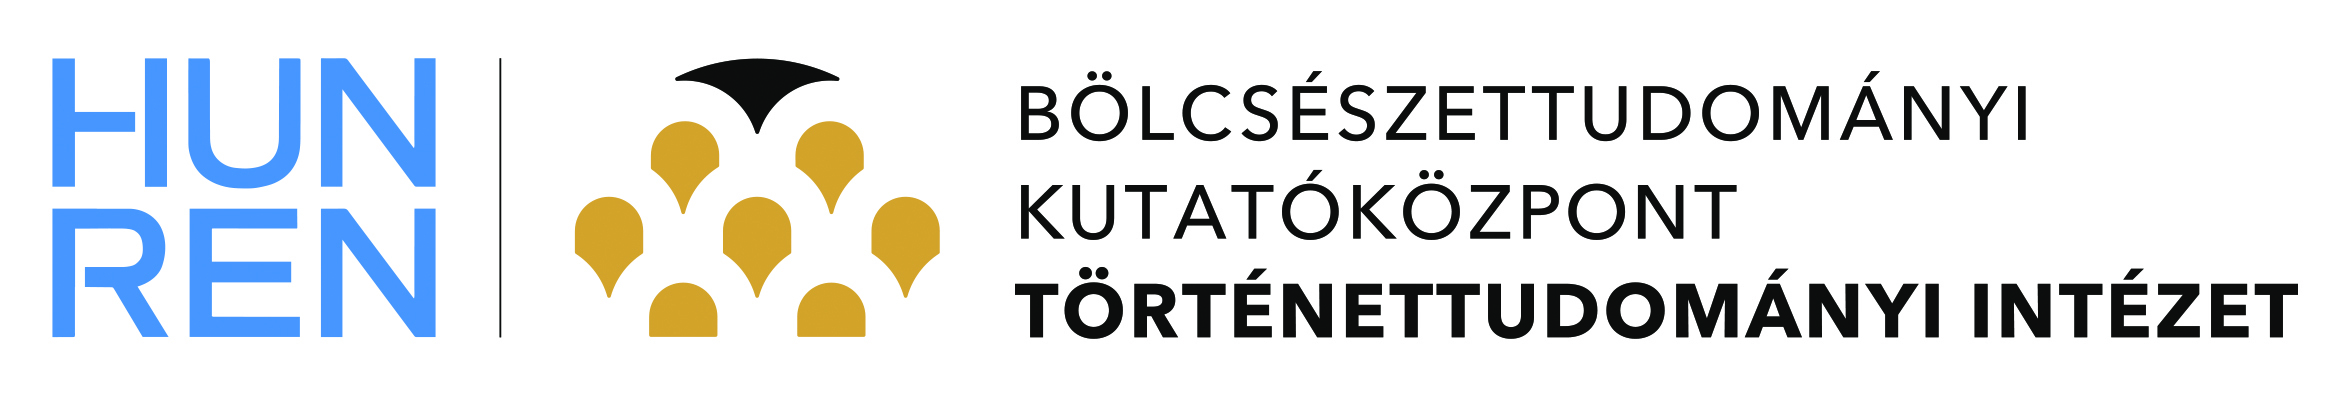 hunren btk tortenettudomanyi logo szines magyar cmyk